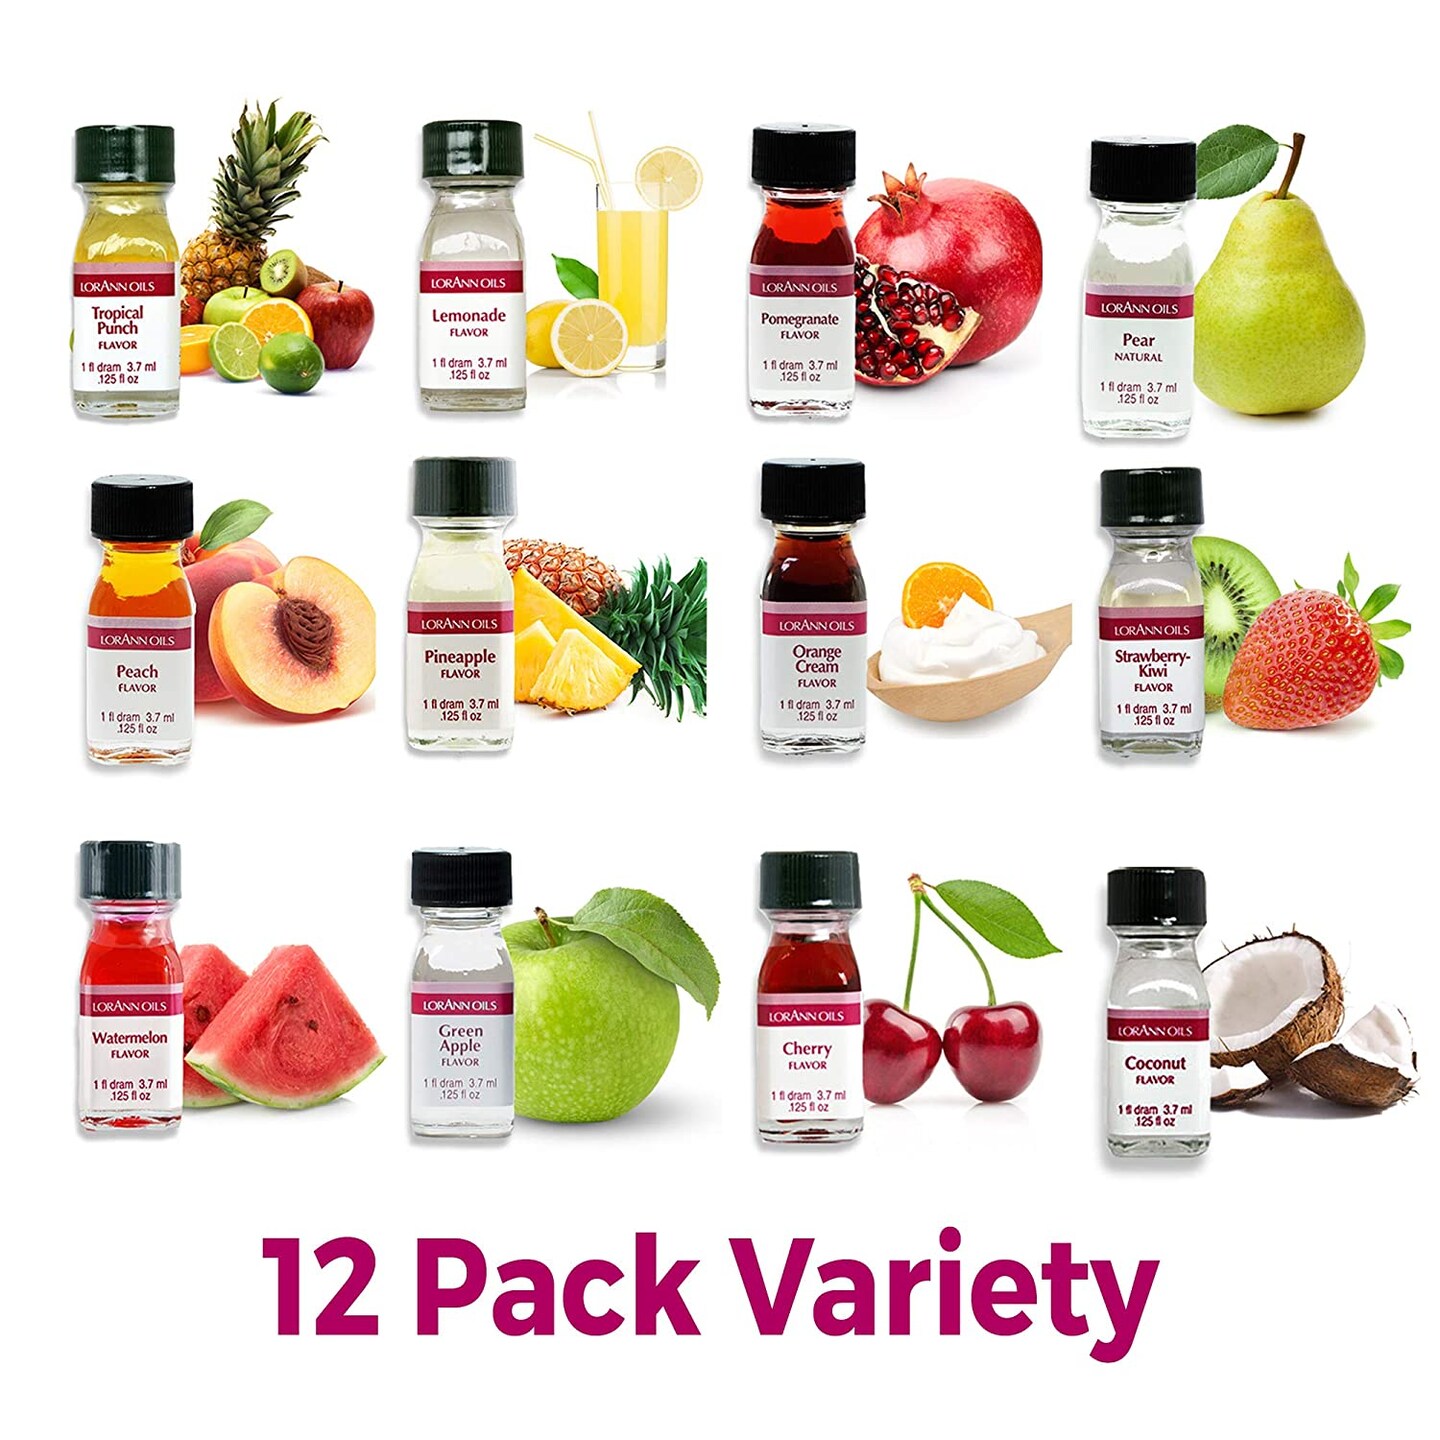 LorAnn Oils StrengthFlavor Food Flavor, 1 Dram Bottle, .0125 fl oz - 3.7ml, - 12 Pack Variety Pack - Set 2